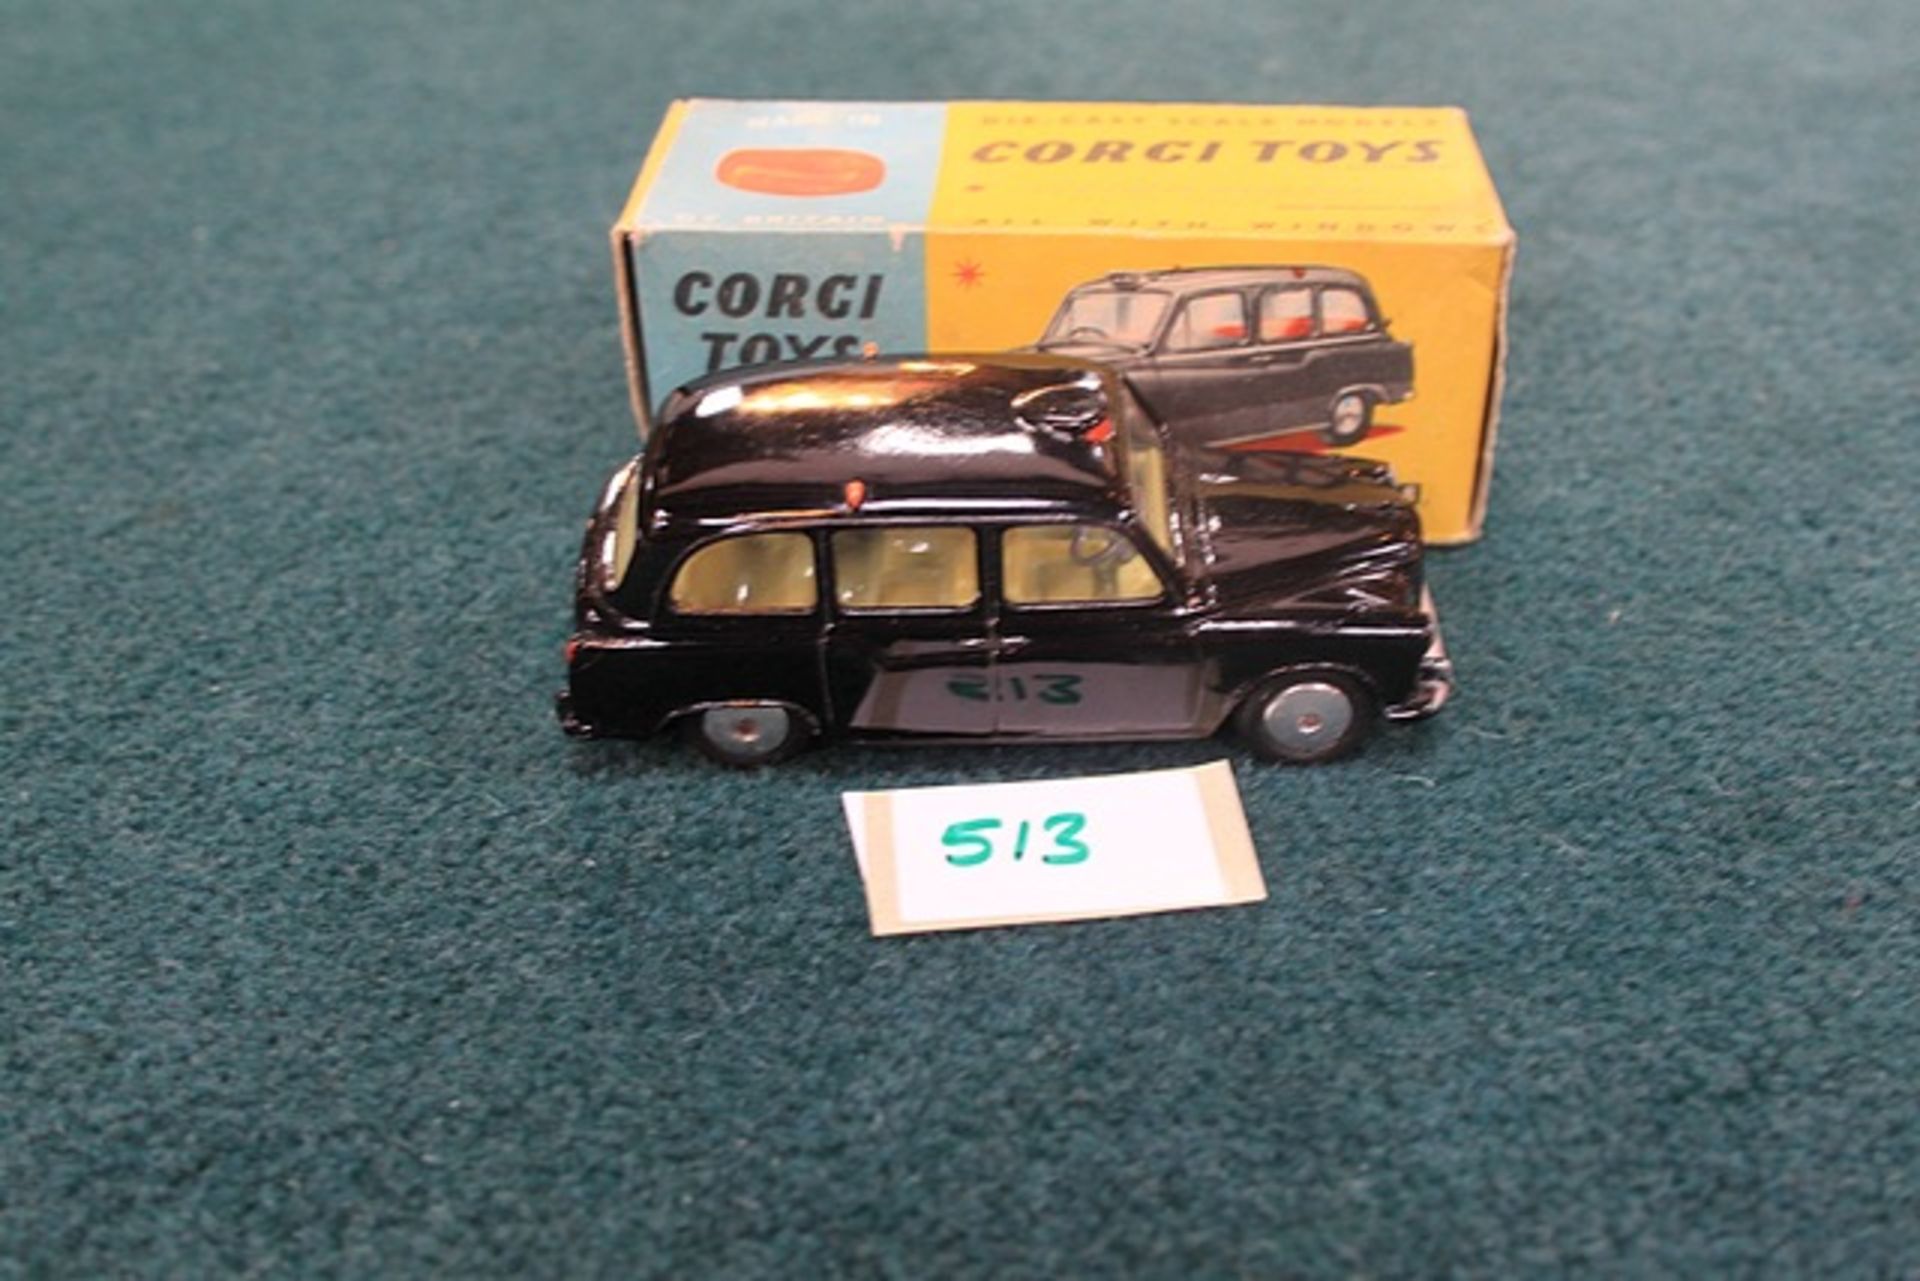 Corgi #418 Diecast Black Austin Taxi Complete With Box - Image 2 of 2